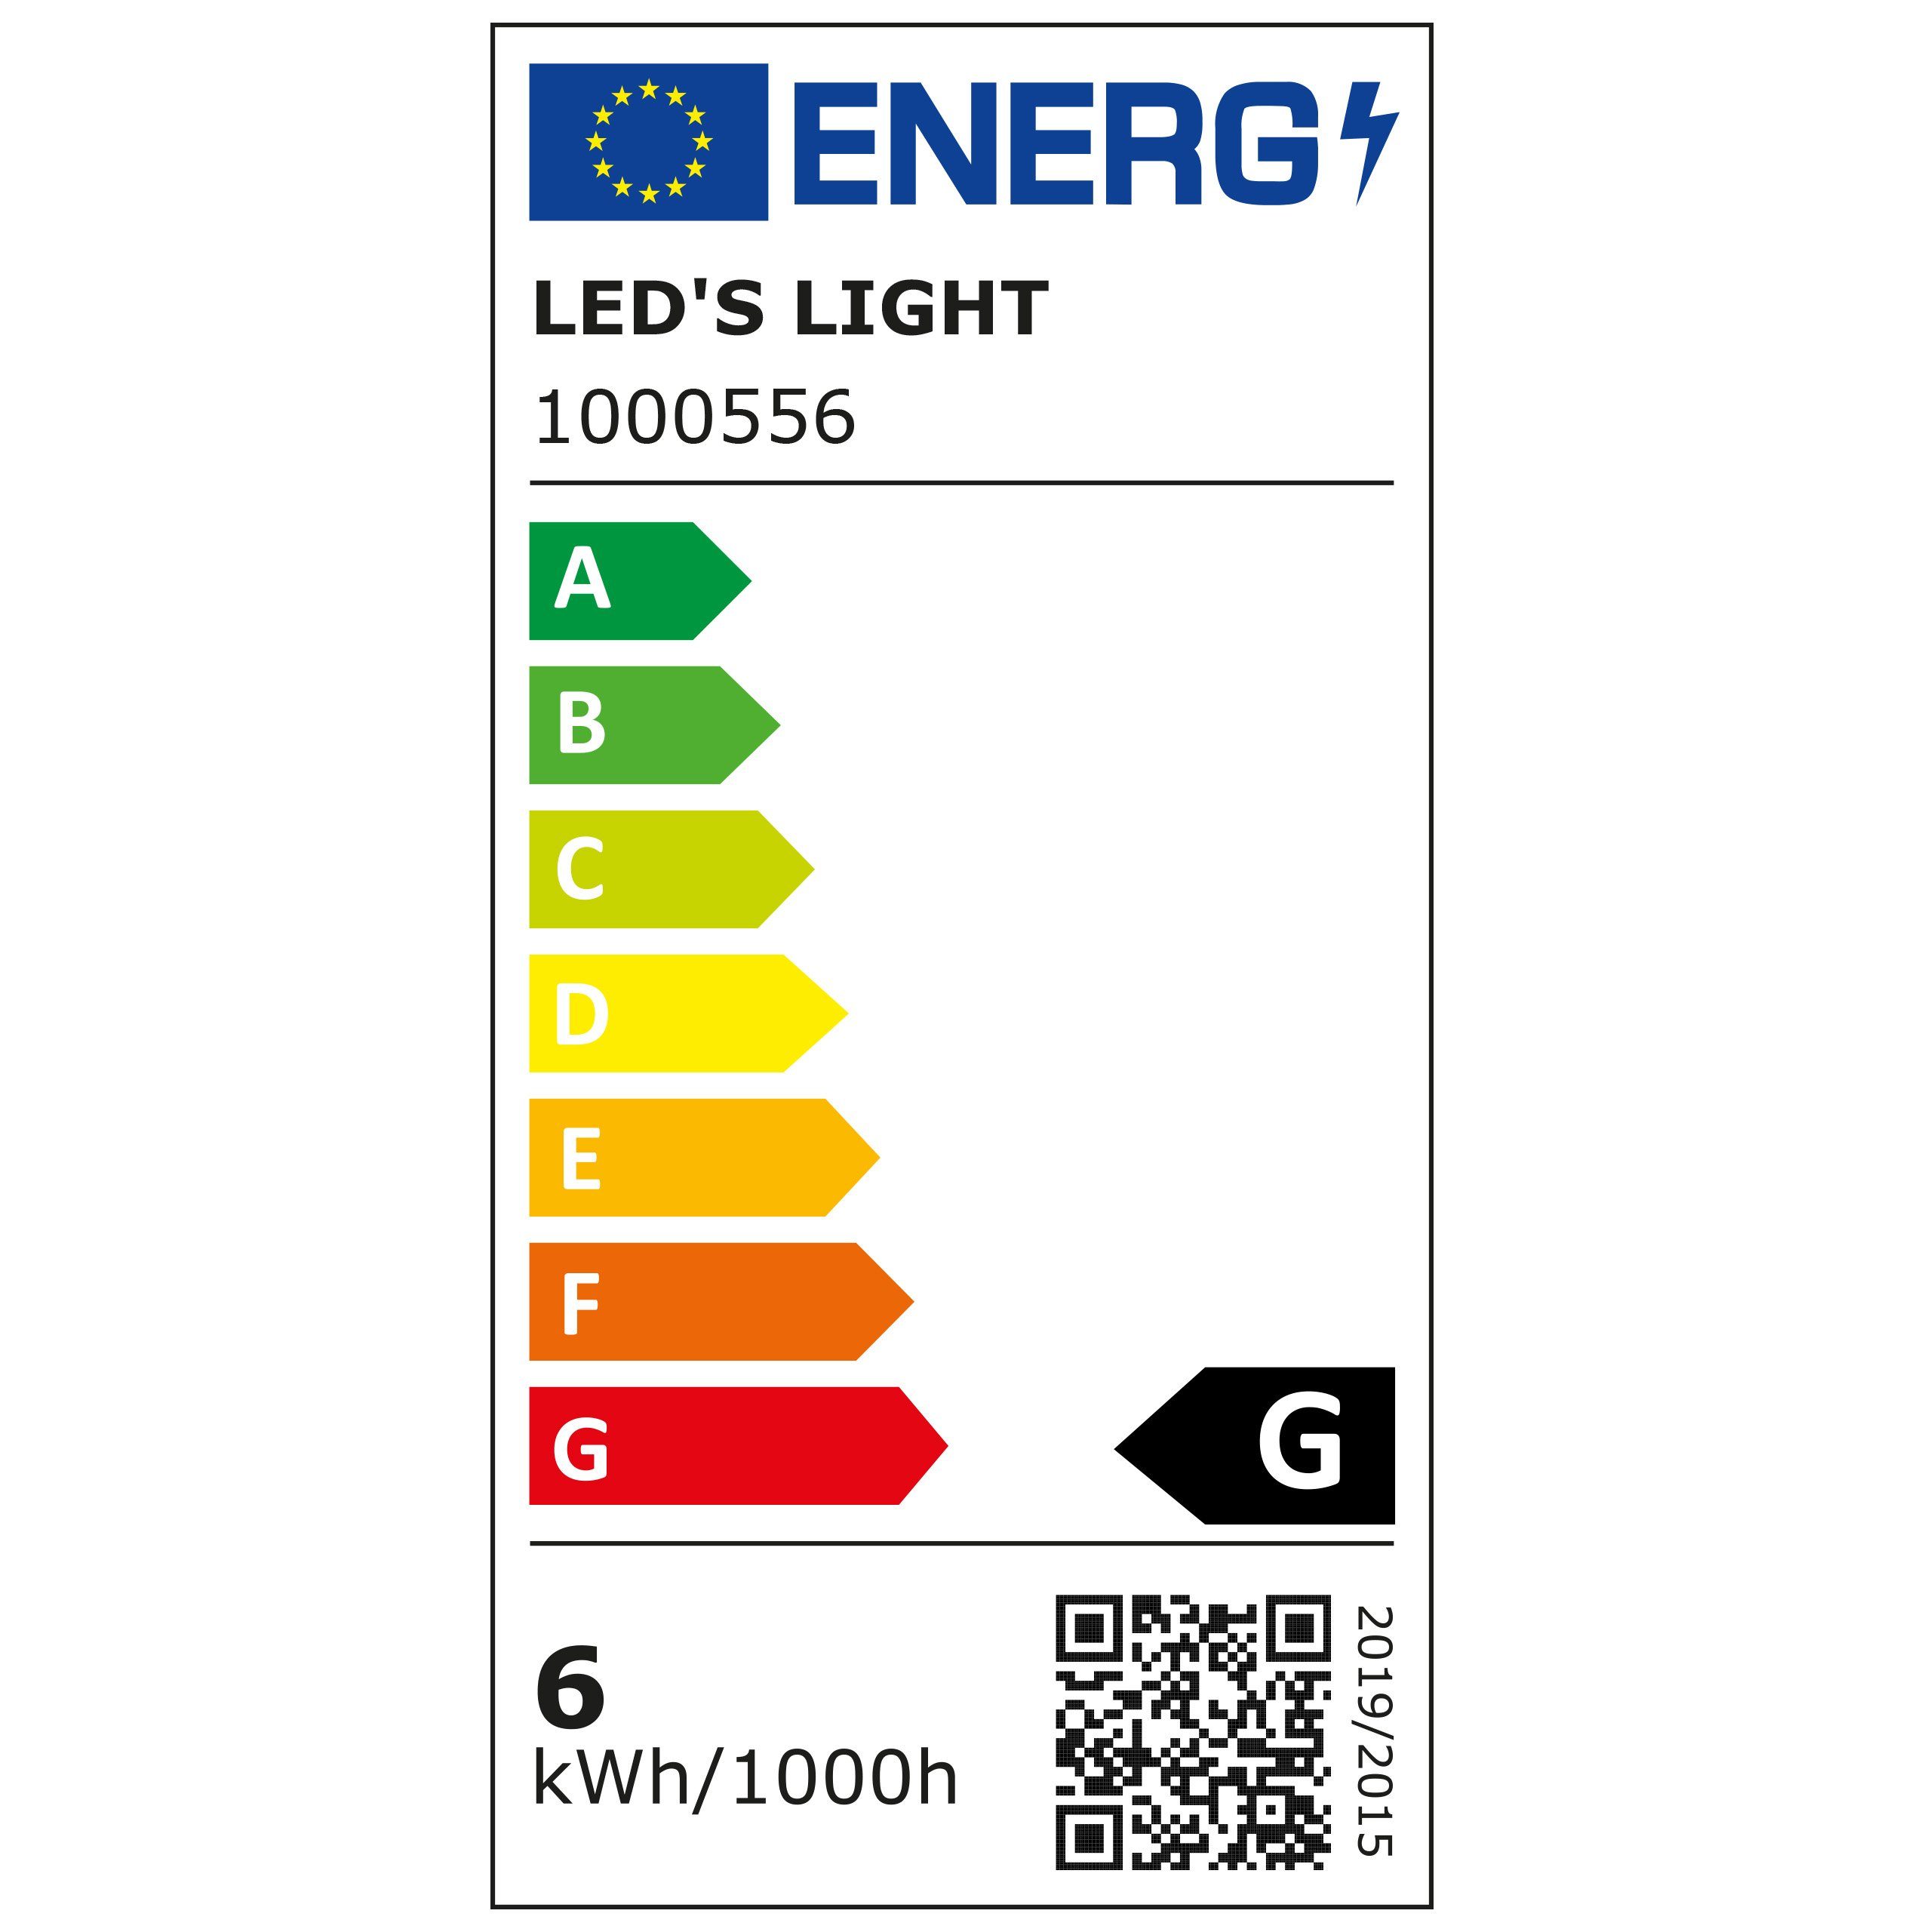 LED LED, 1000556 warmweiß Watt weiß Up-Down LED Außen-Wandleuchte, LED's light IP65 6 Außen-Wandleuchte